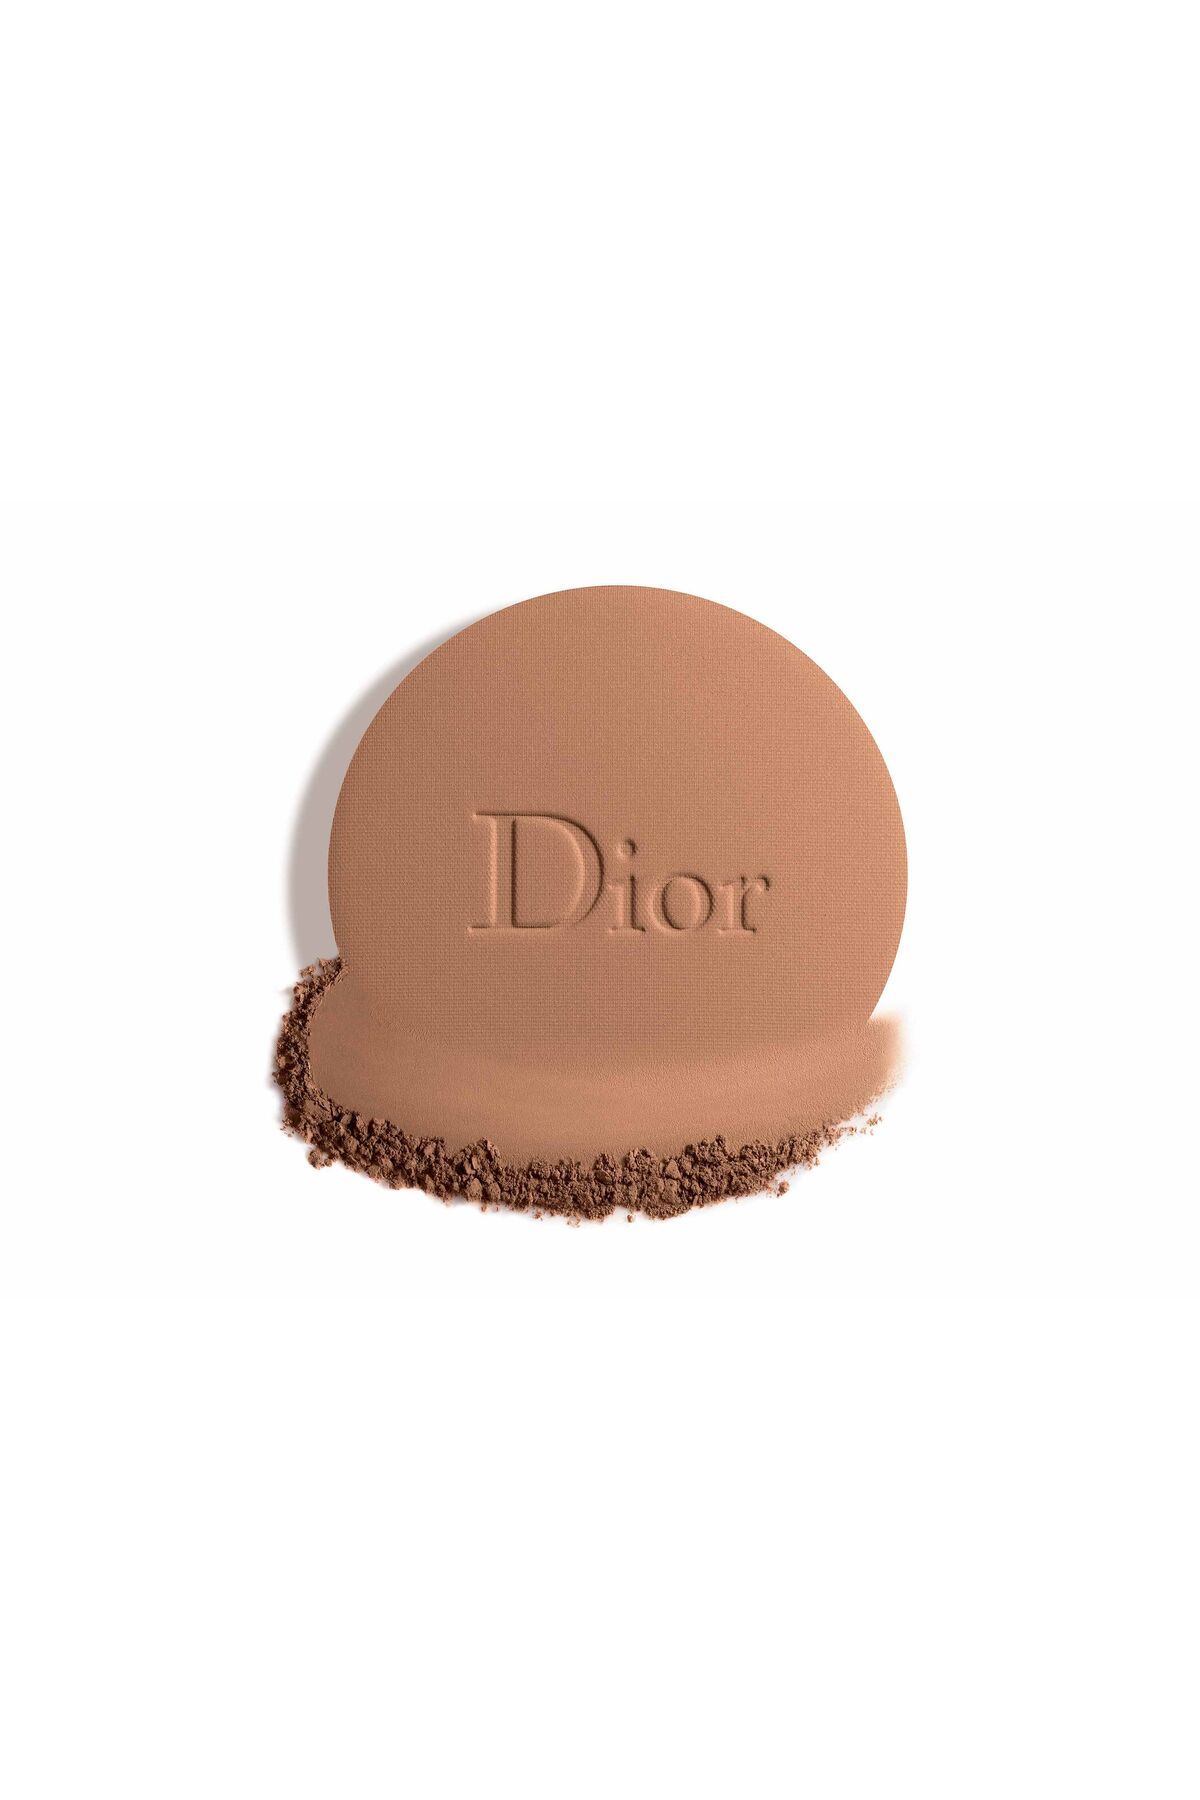 Dior پودر برنز طبیعی برای ماندگاری طولانی با رطوبت و درخشنده